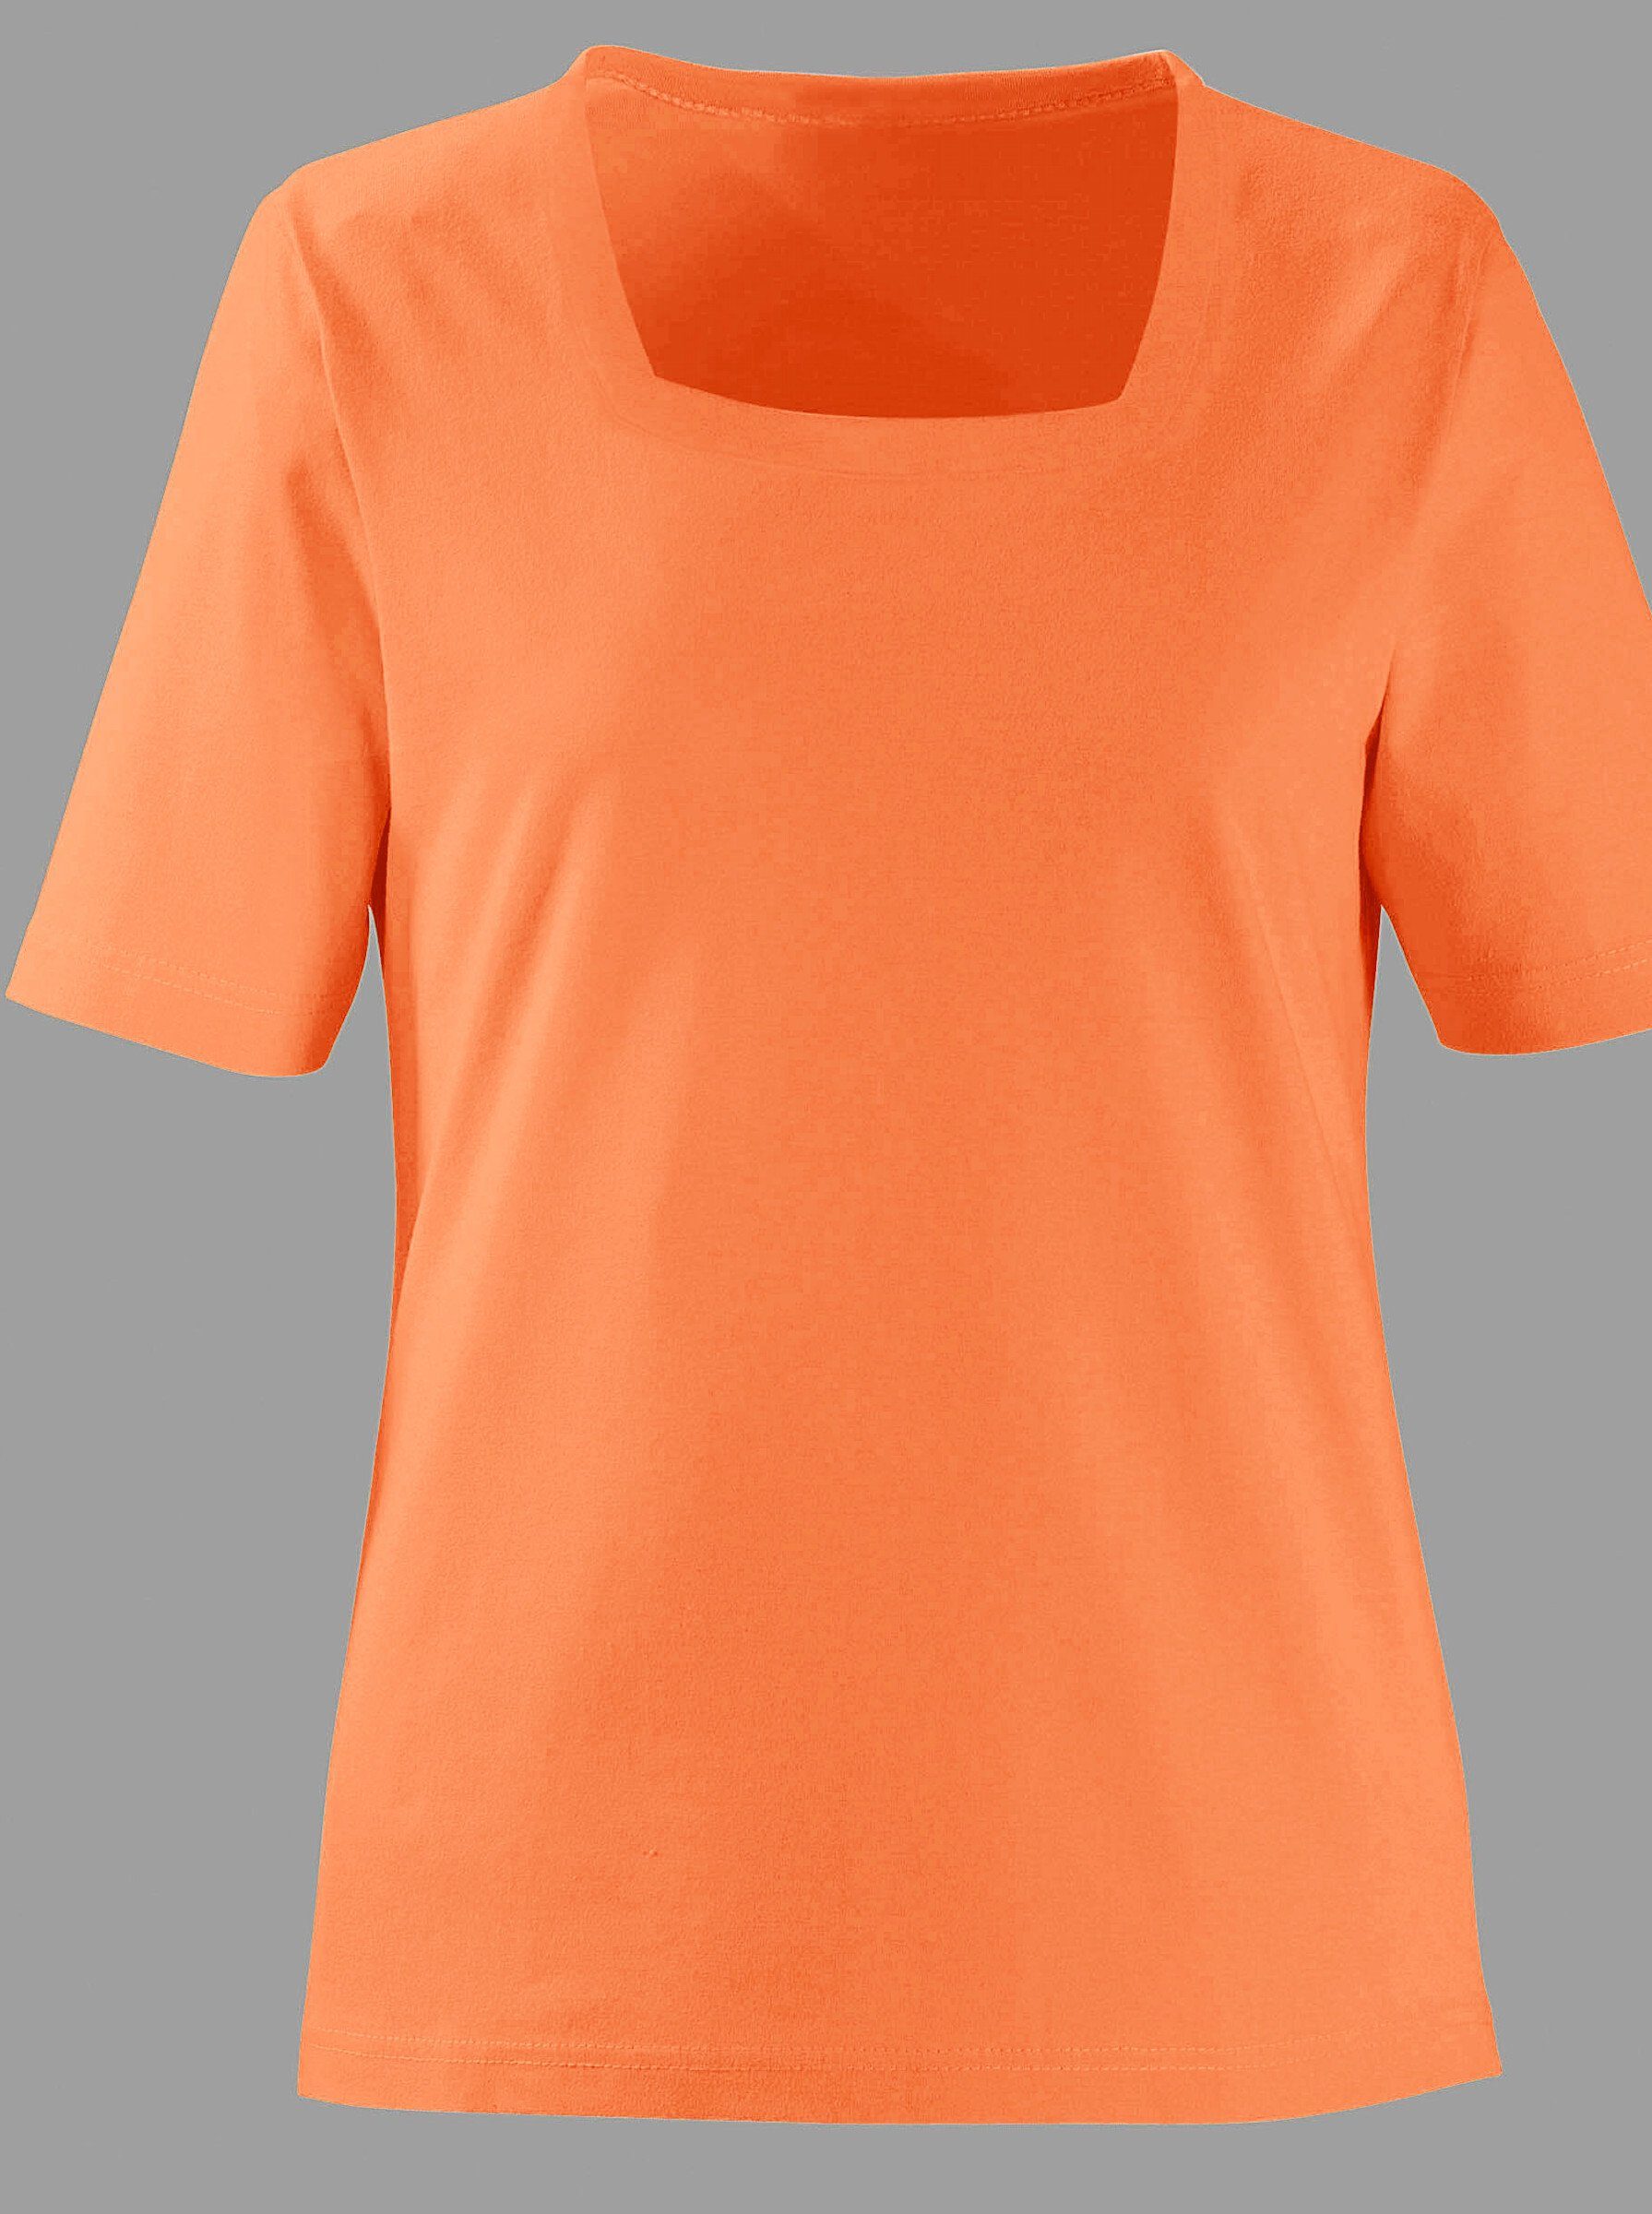 WITT WEIDEN T-Shirt orange